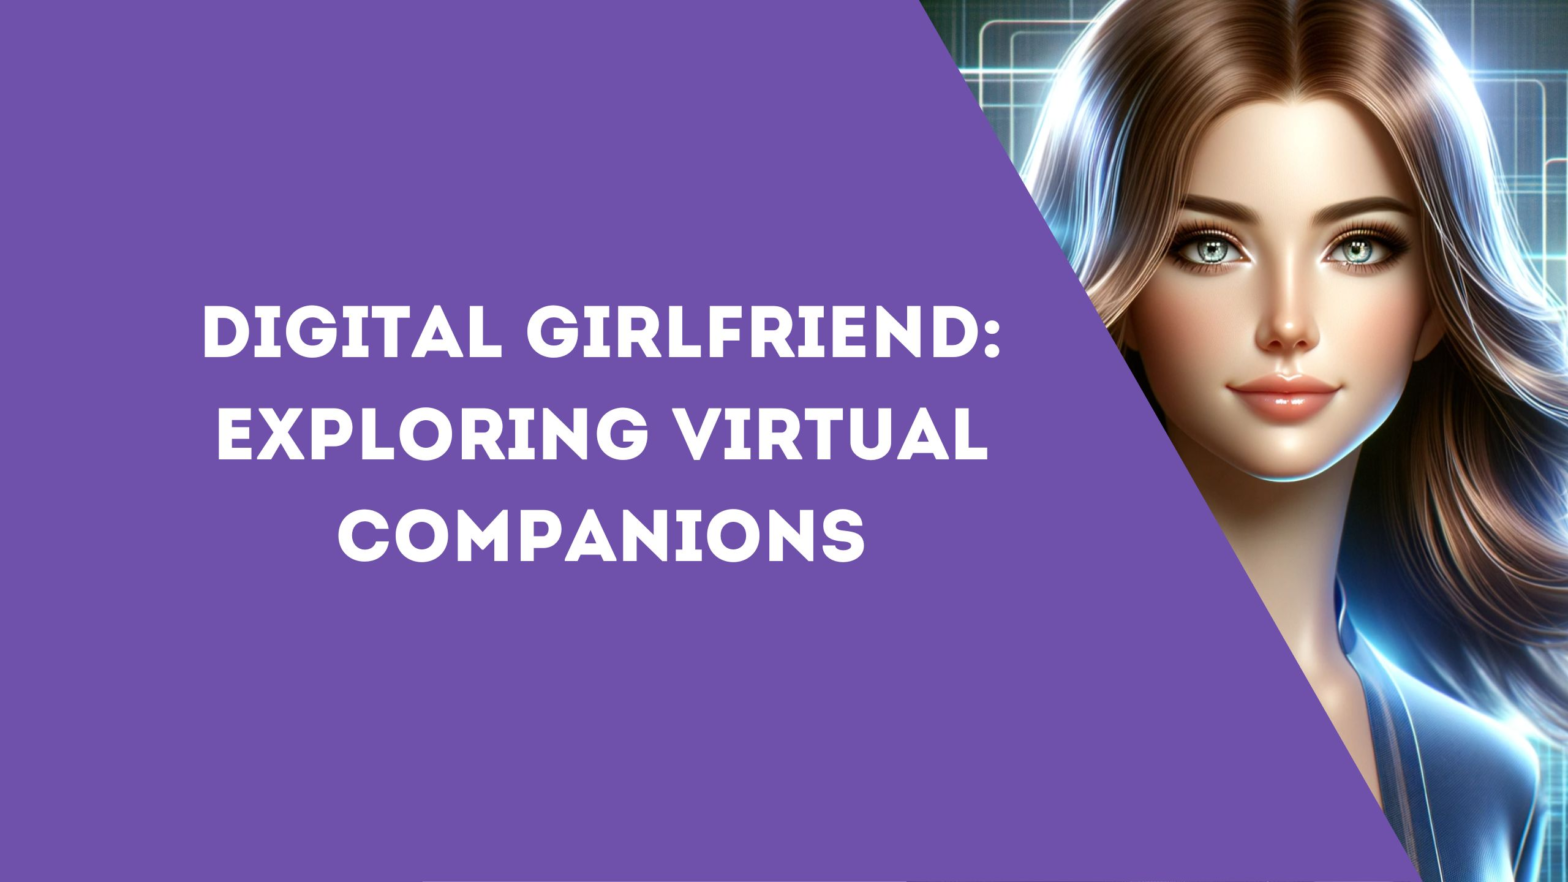 Digital Girlfriend: Exploring Virtual Companions